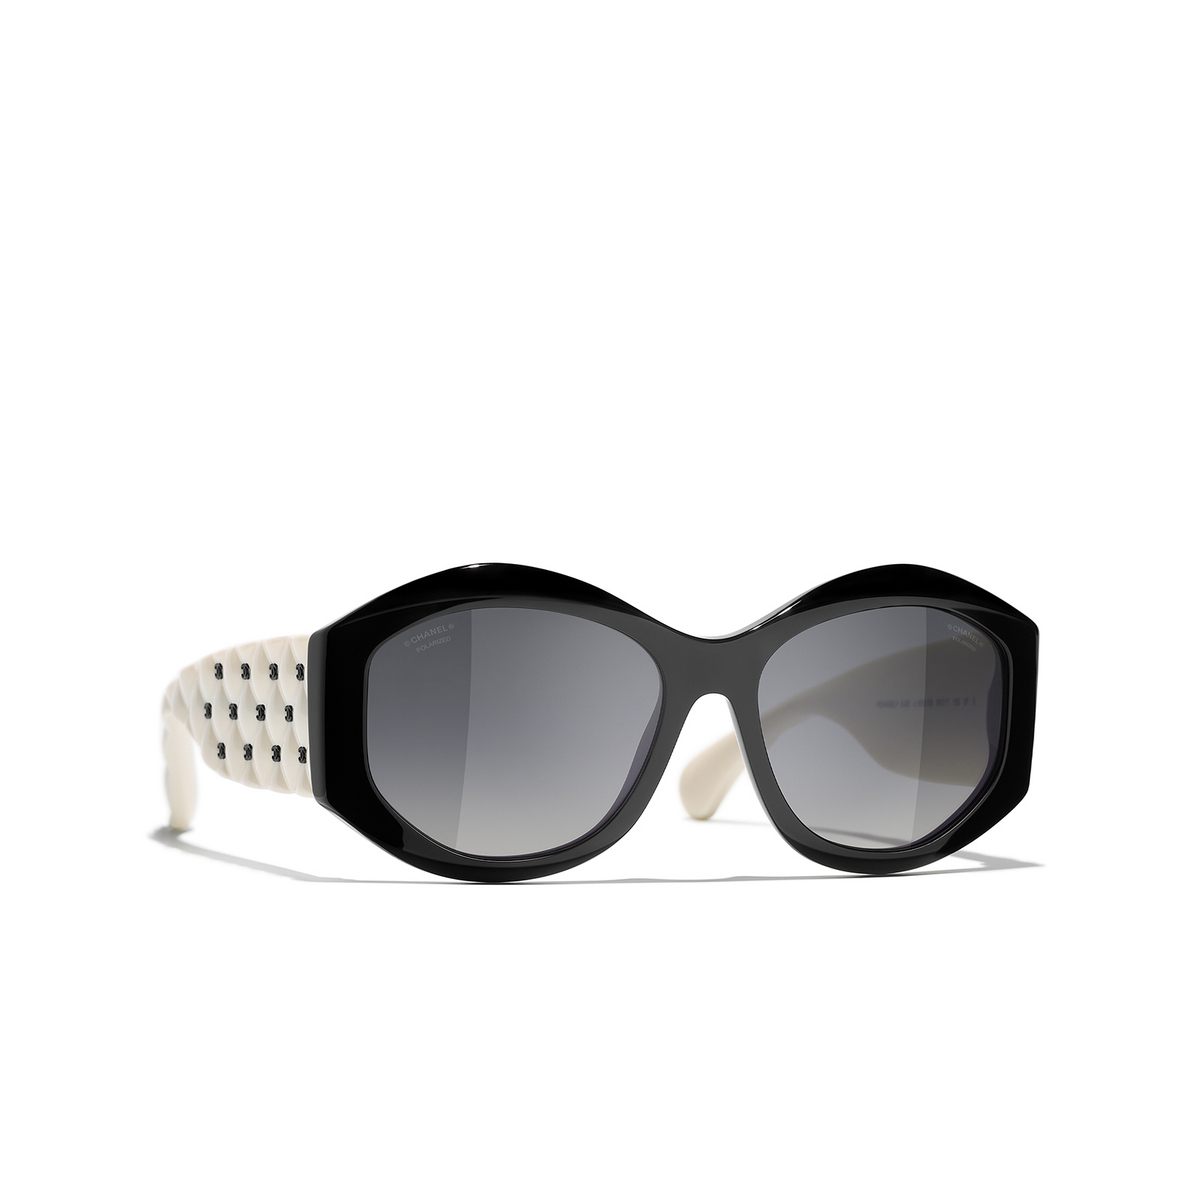 CHANEL oval Sunglasses 1656S8 Black & White - three-quarters view